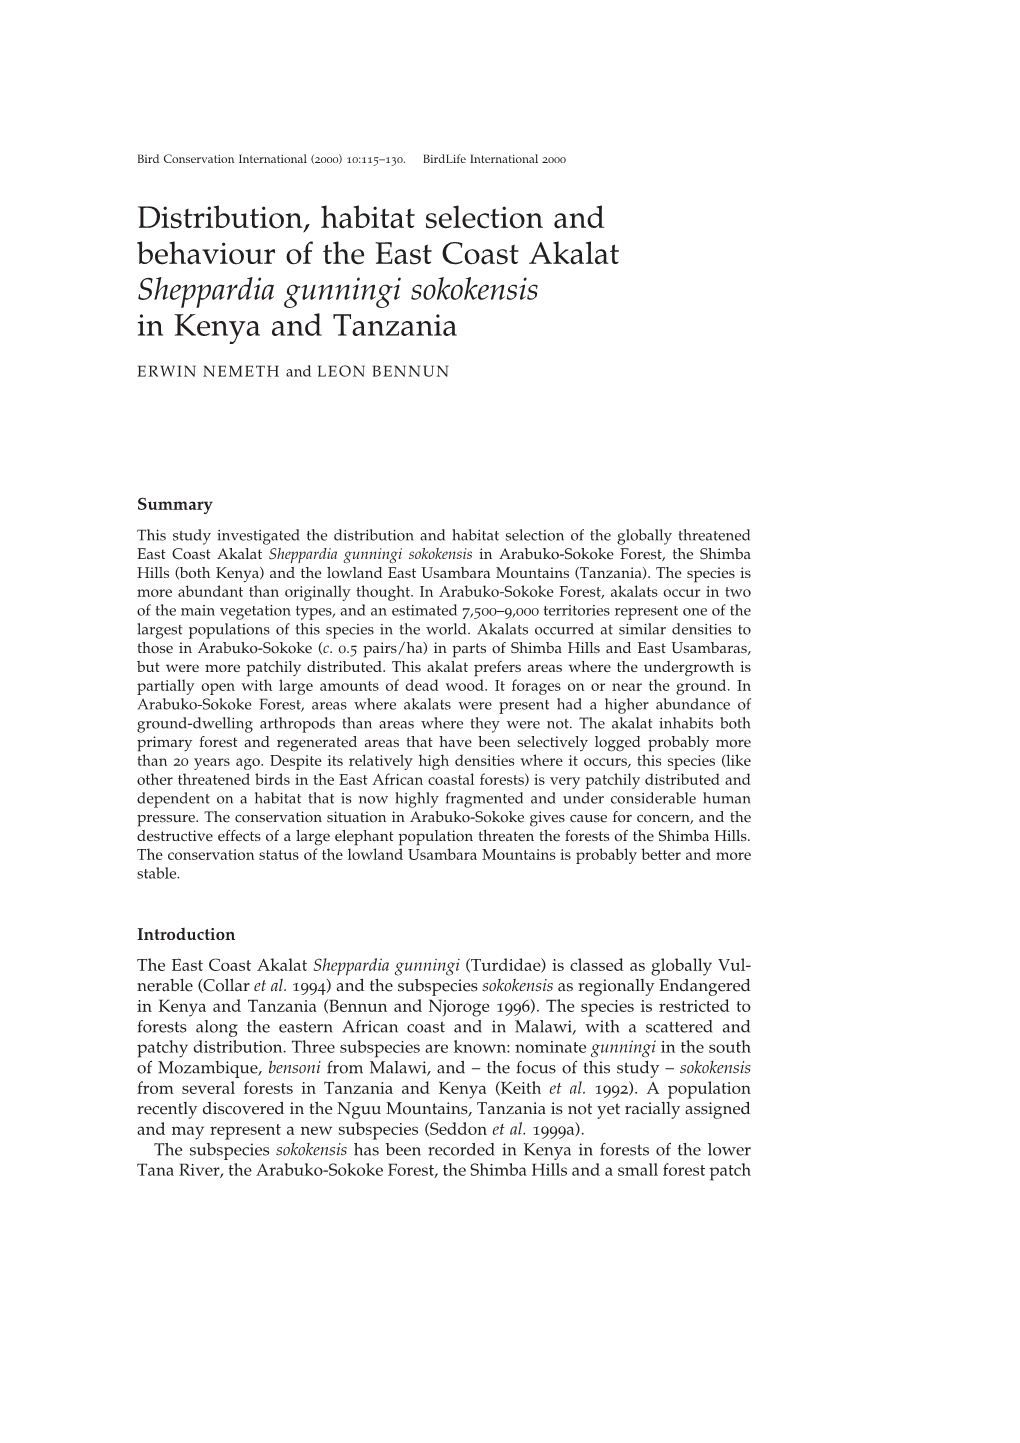 Distribution, Habitat Selection and Behaviour of the East Coast Akalat Sheppardia Gunningi Sokokensis in Kenya and Tanzania